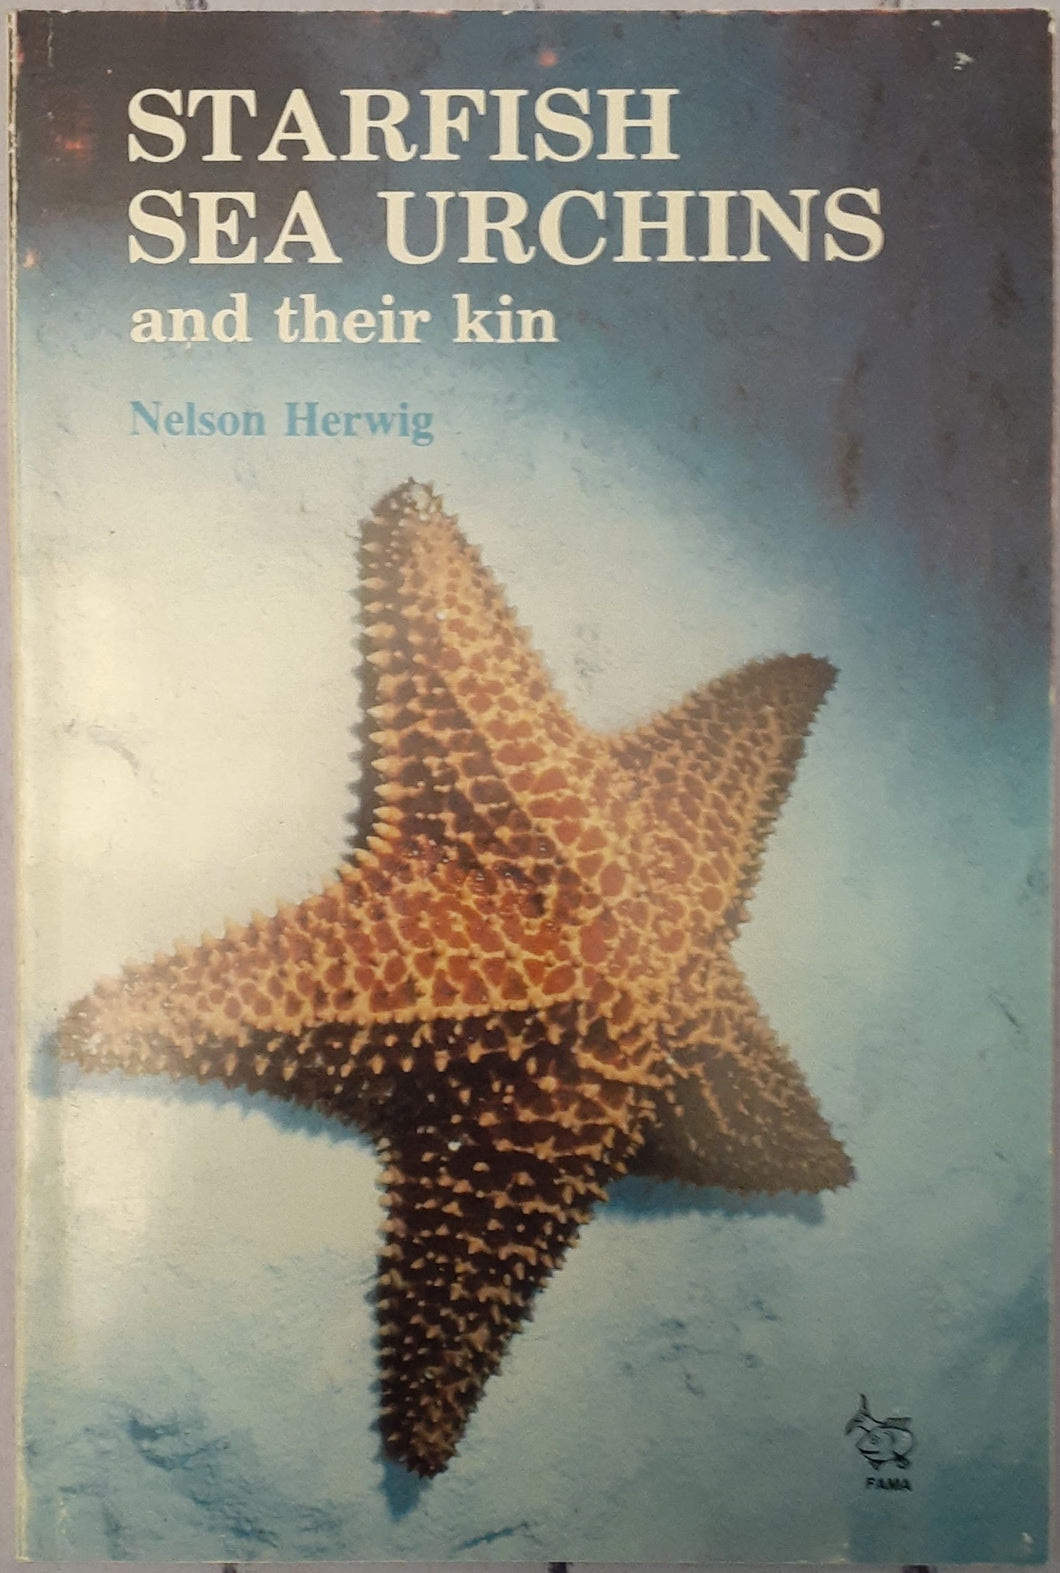 Starfish Sea Urchins and their Kin